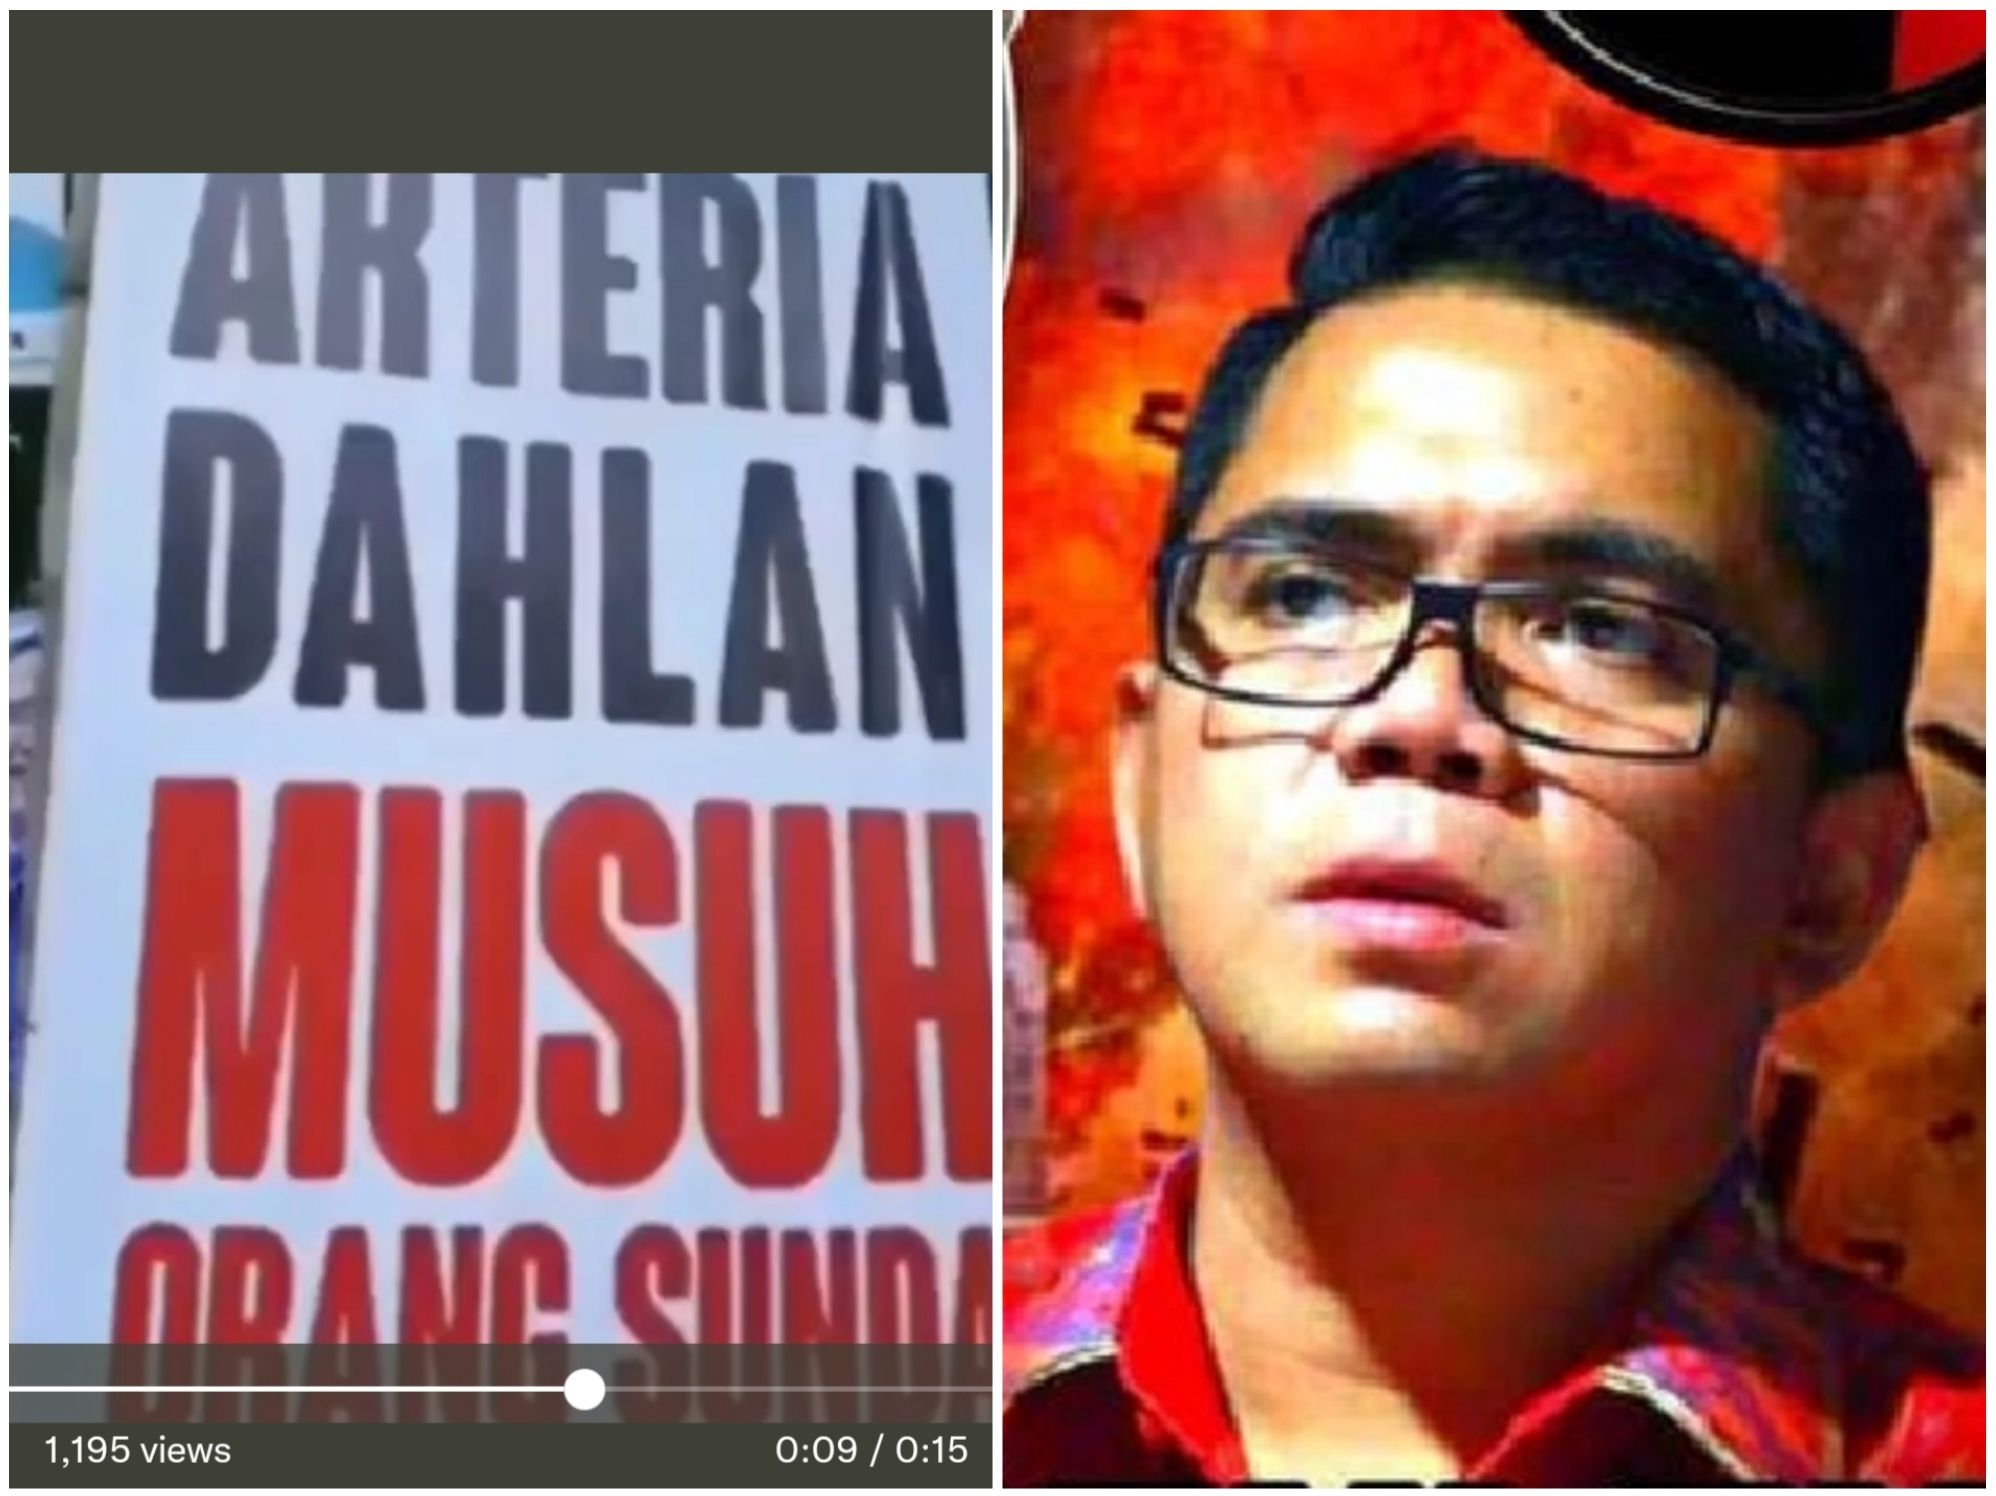 Baliho Arteria Dahlan Musuh Orang Sunda Terpampang di Bandung.